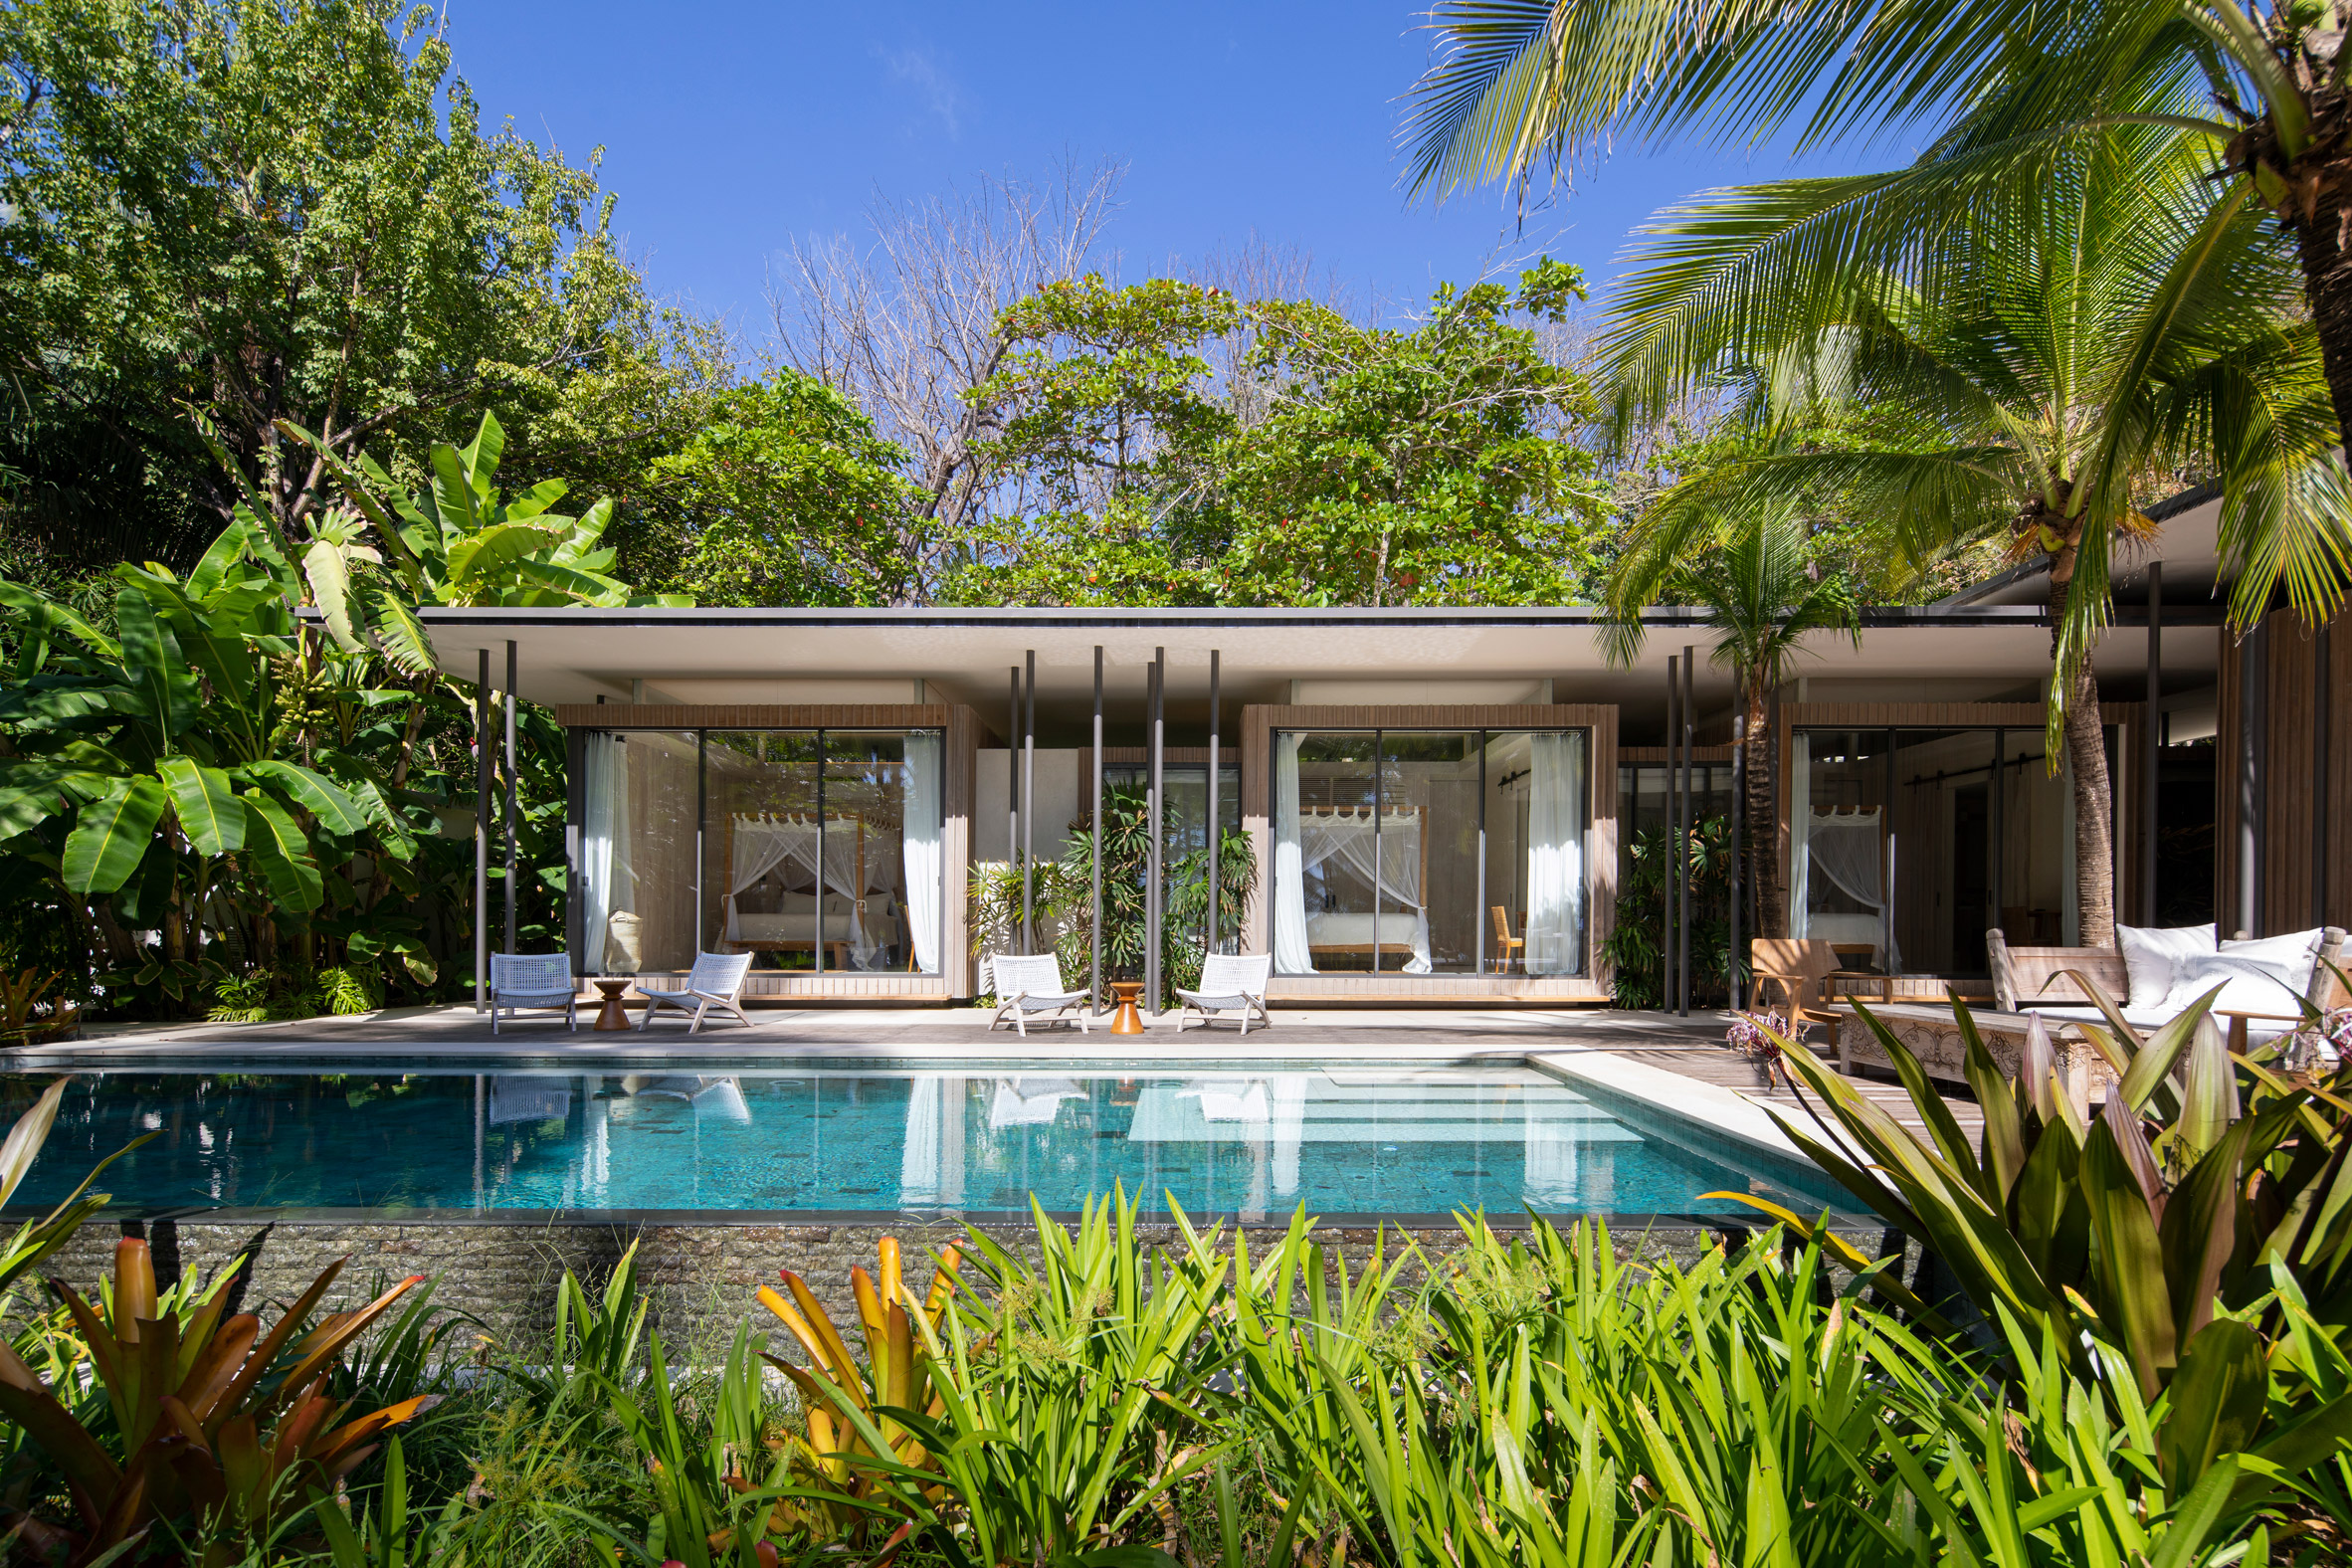 Studio Saxe nestled Sirena House in the Costa Rican jungle